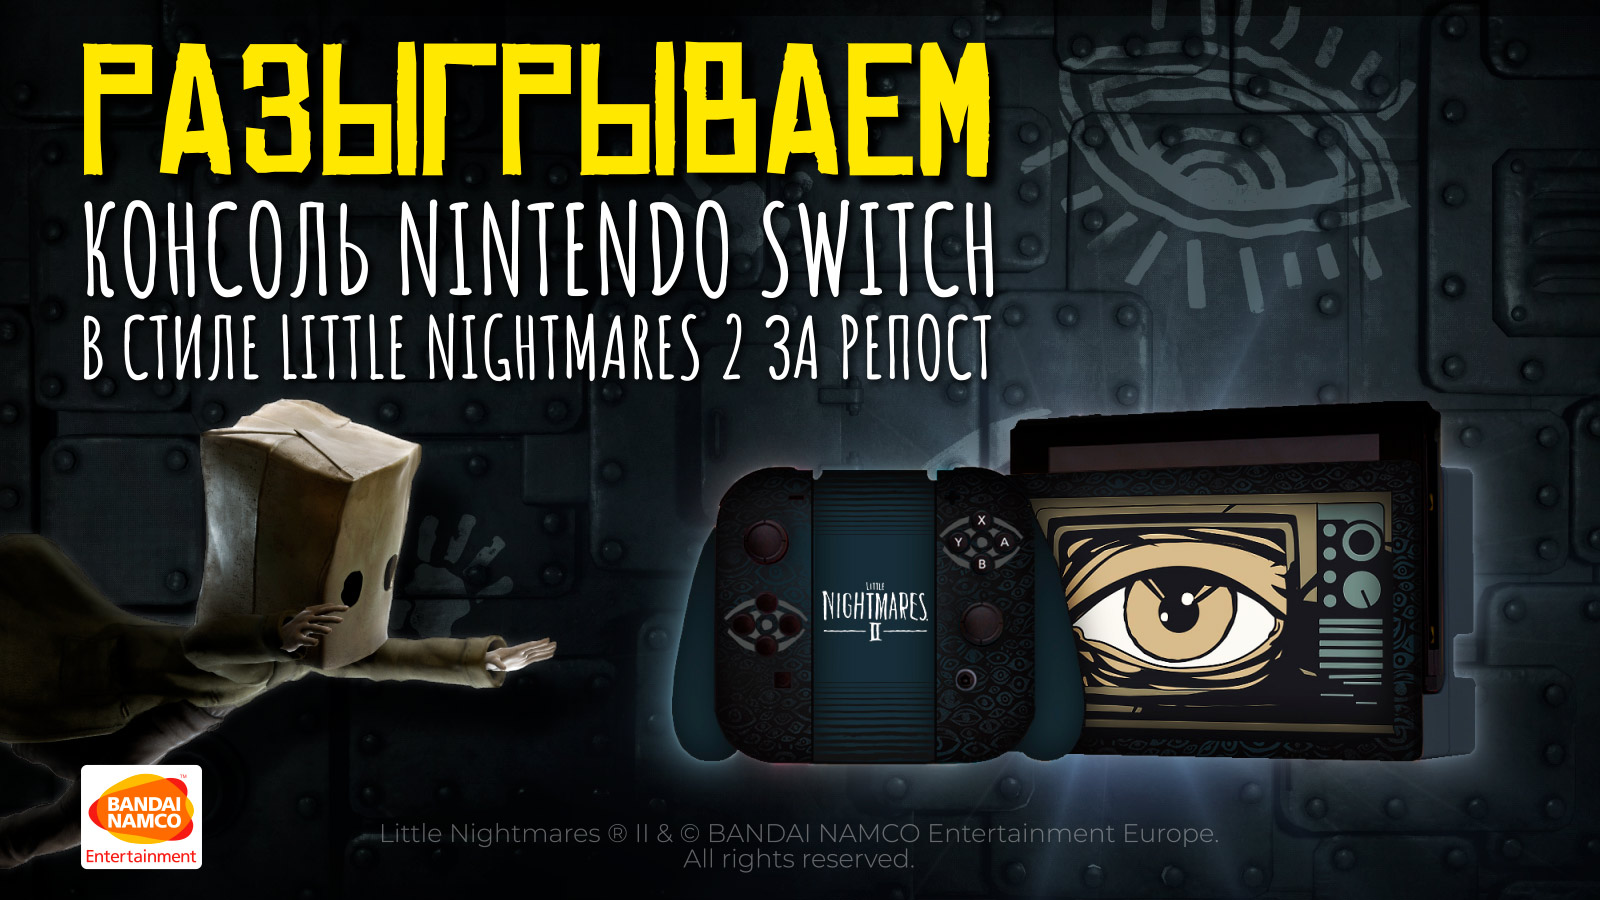 Nintendo switch nightmares. Little Nightmares 2 Nintendo Switch. Little Nightmares 2 на Nintendo Switch Lite. Нинтендо свитч в стиле little Nightmares 2. Little Nightmares complete Edition Nintendo Switch.